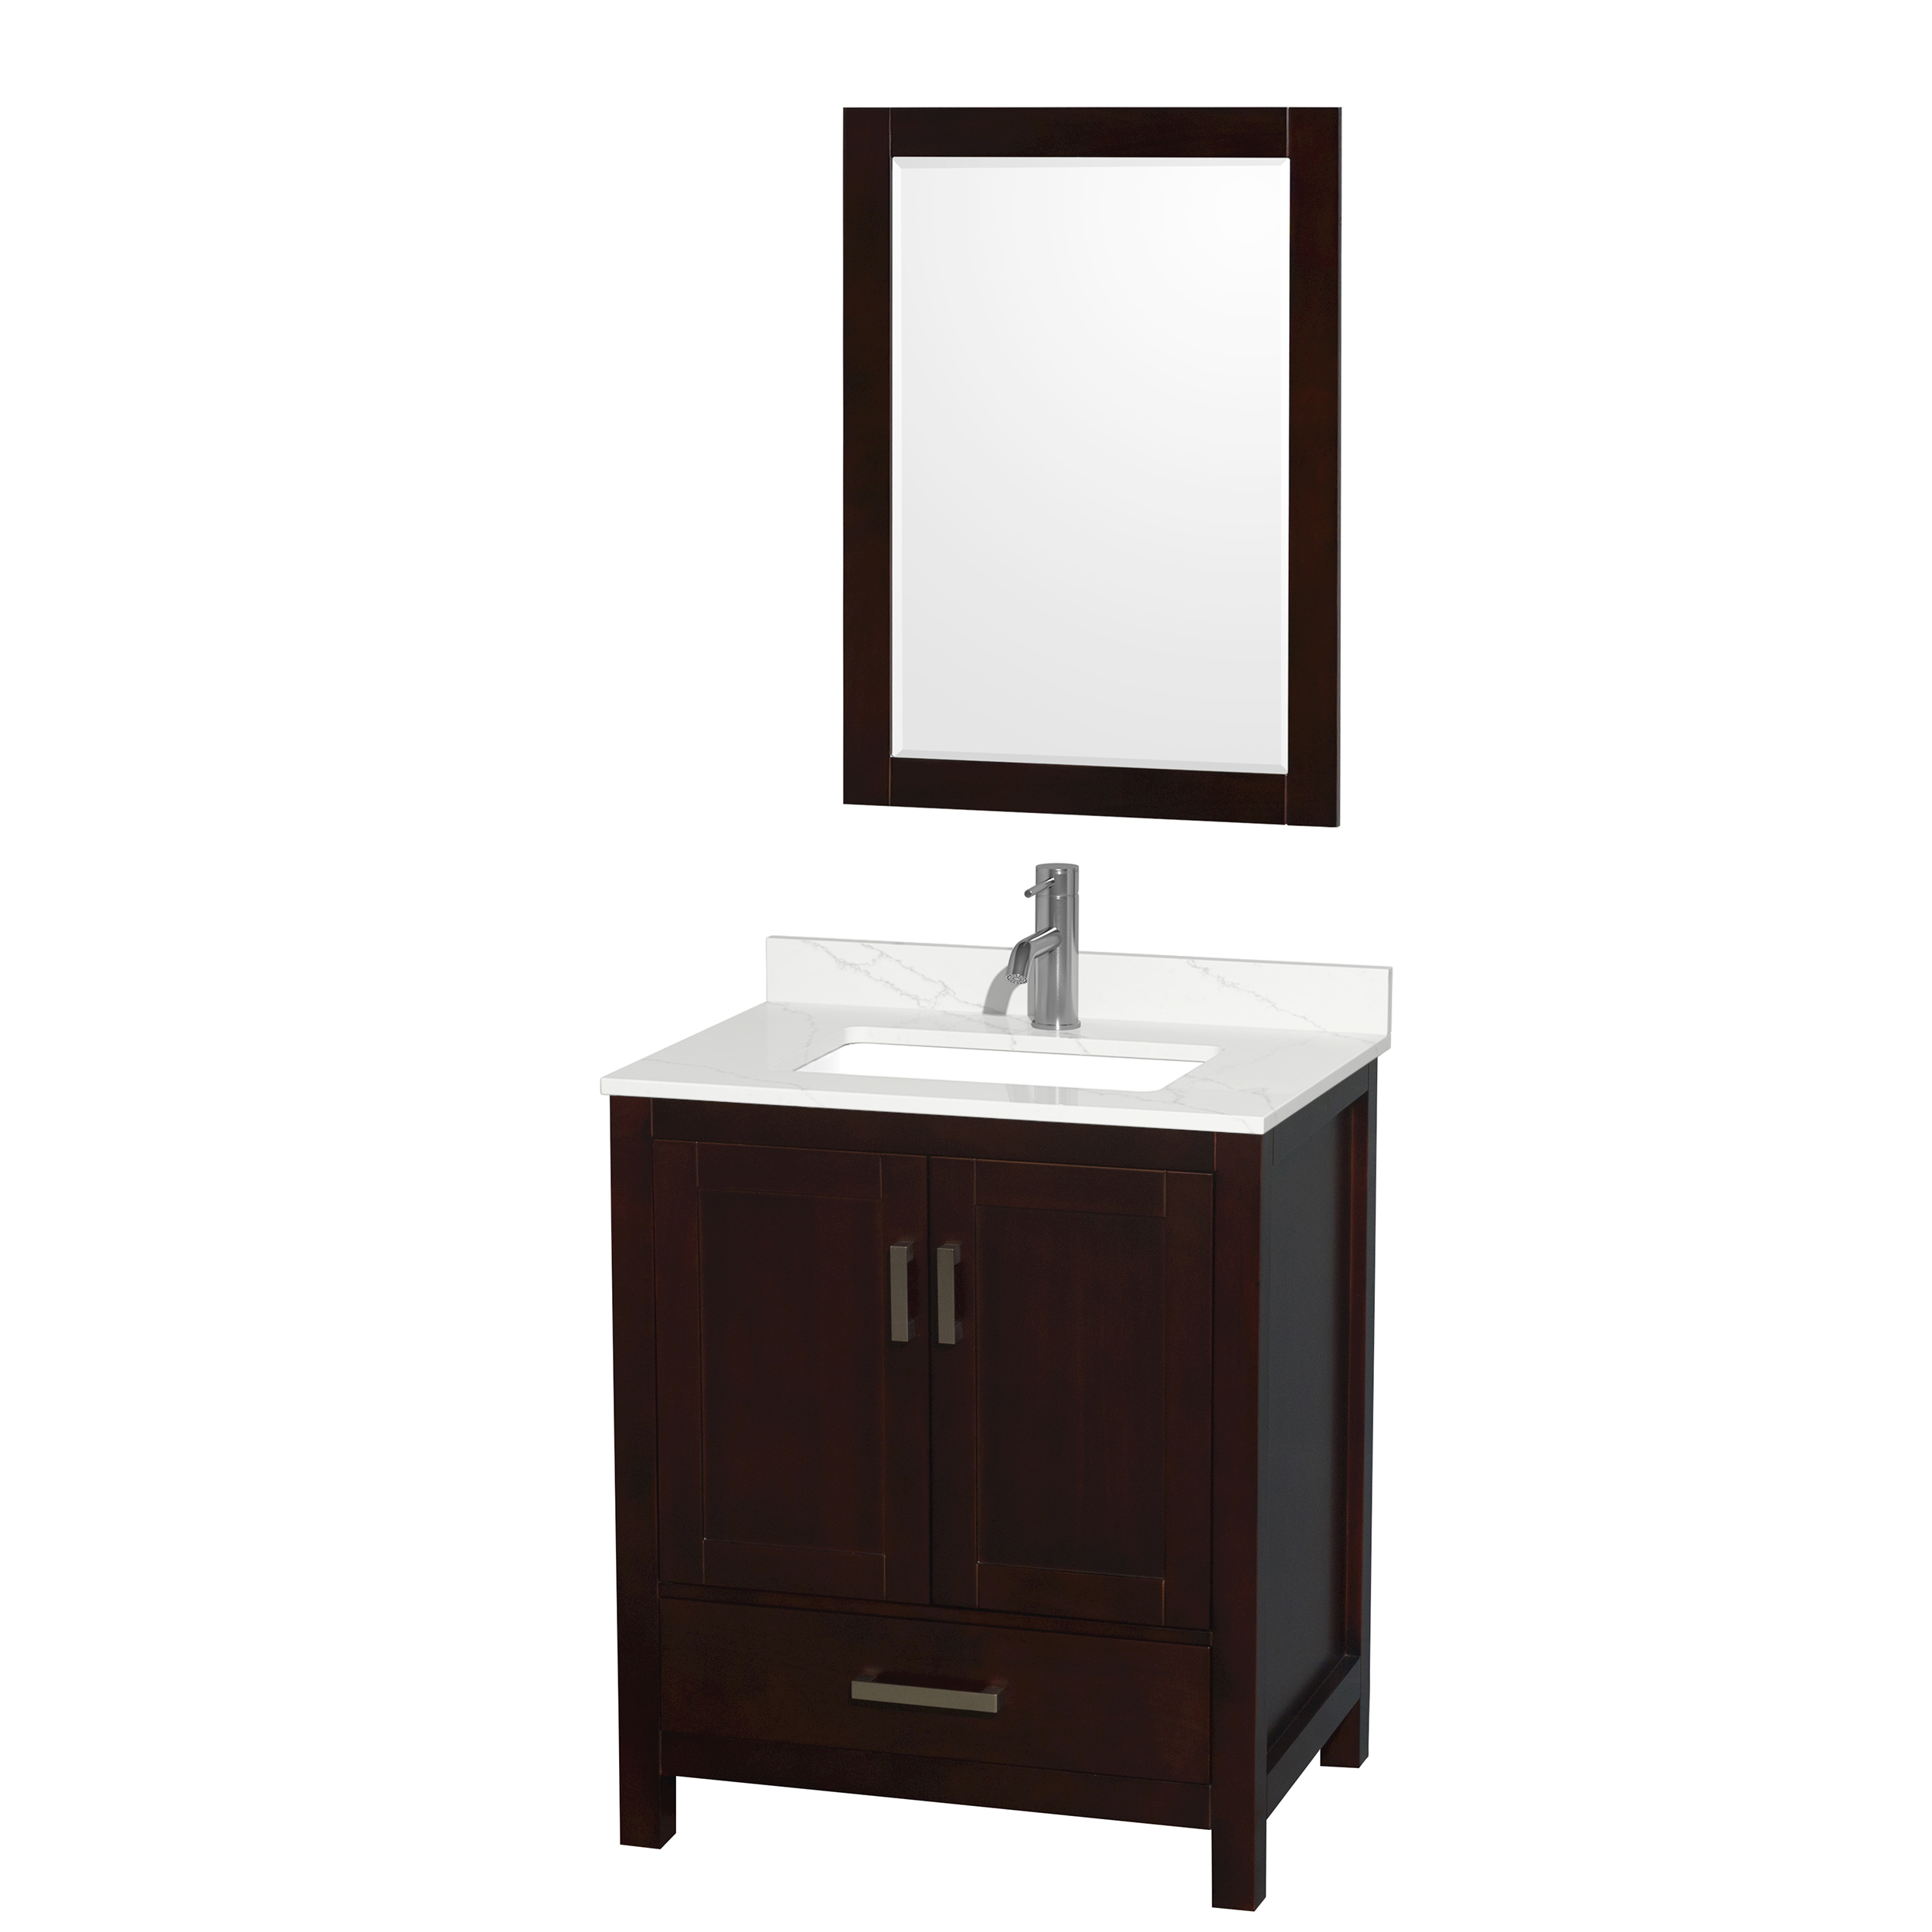 sheffield 30" single bathroom vanity by wyndham collection - espresso